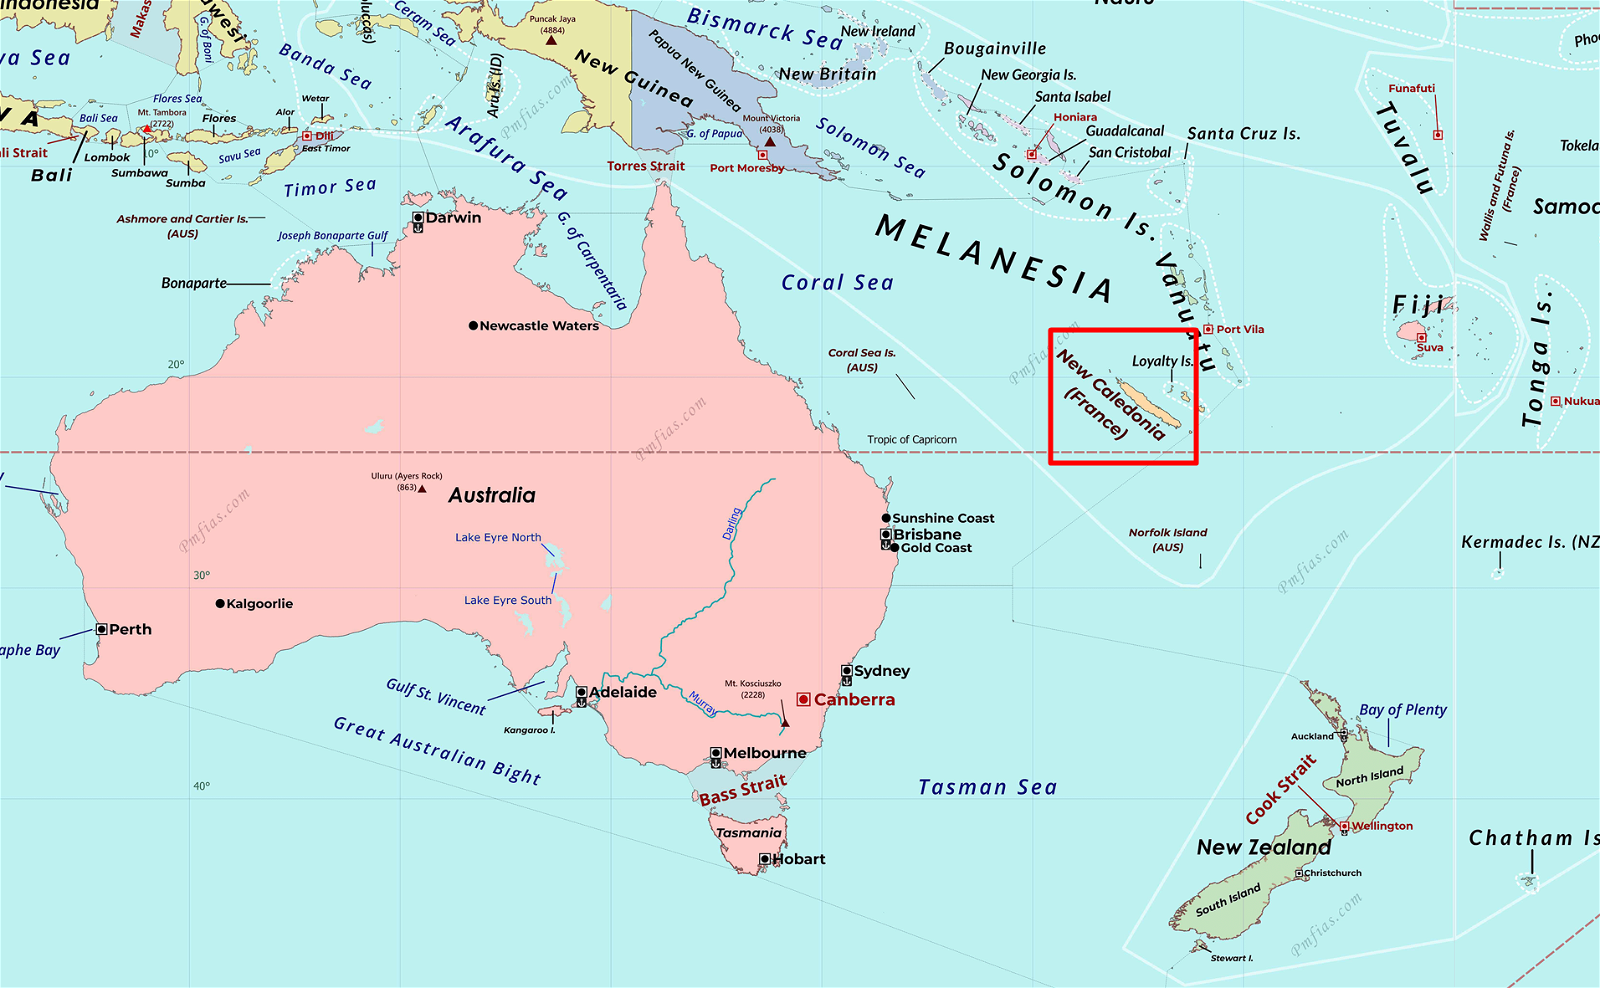 New Caledonia - PMF IAS